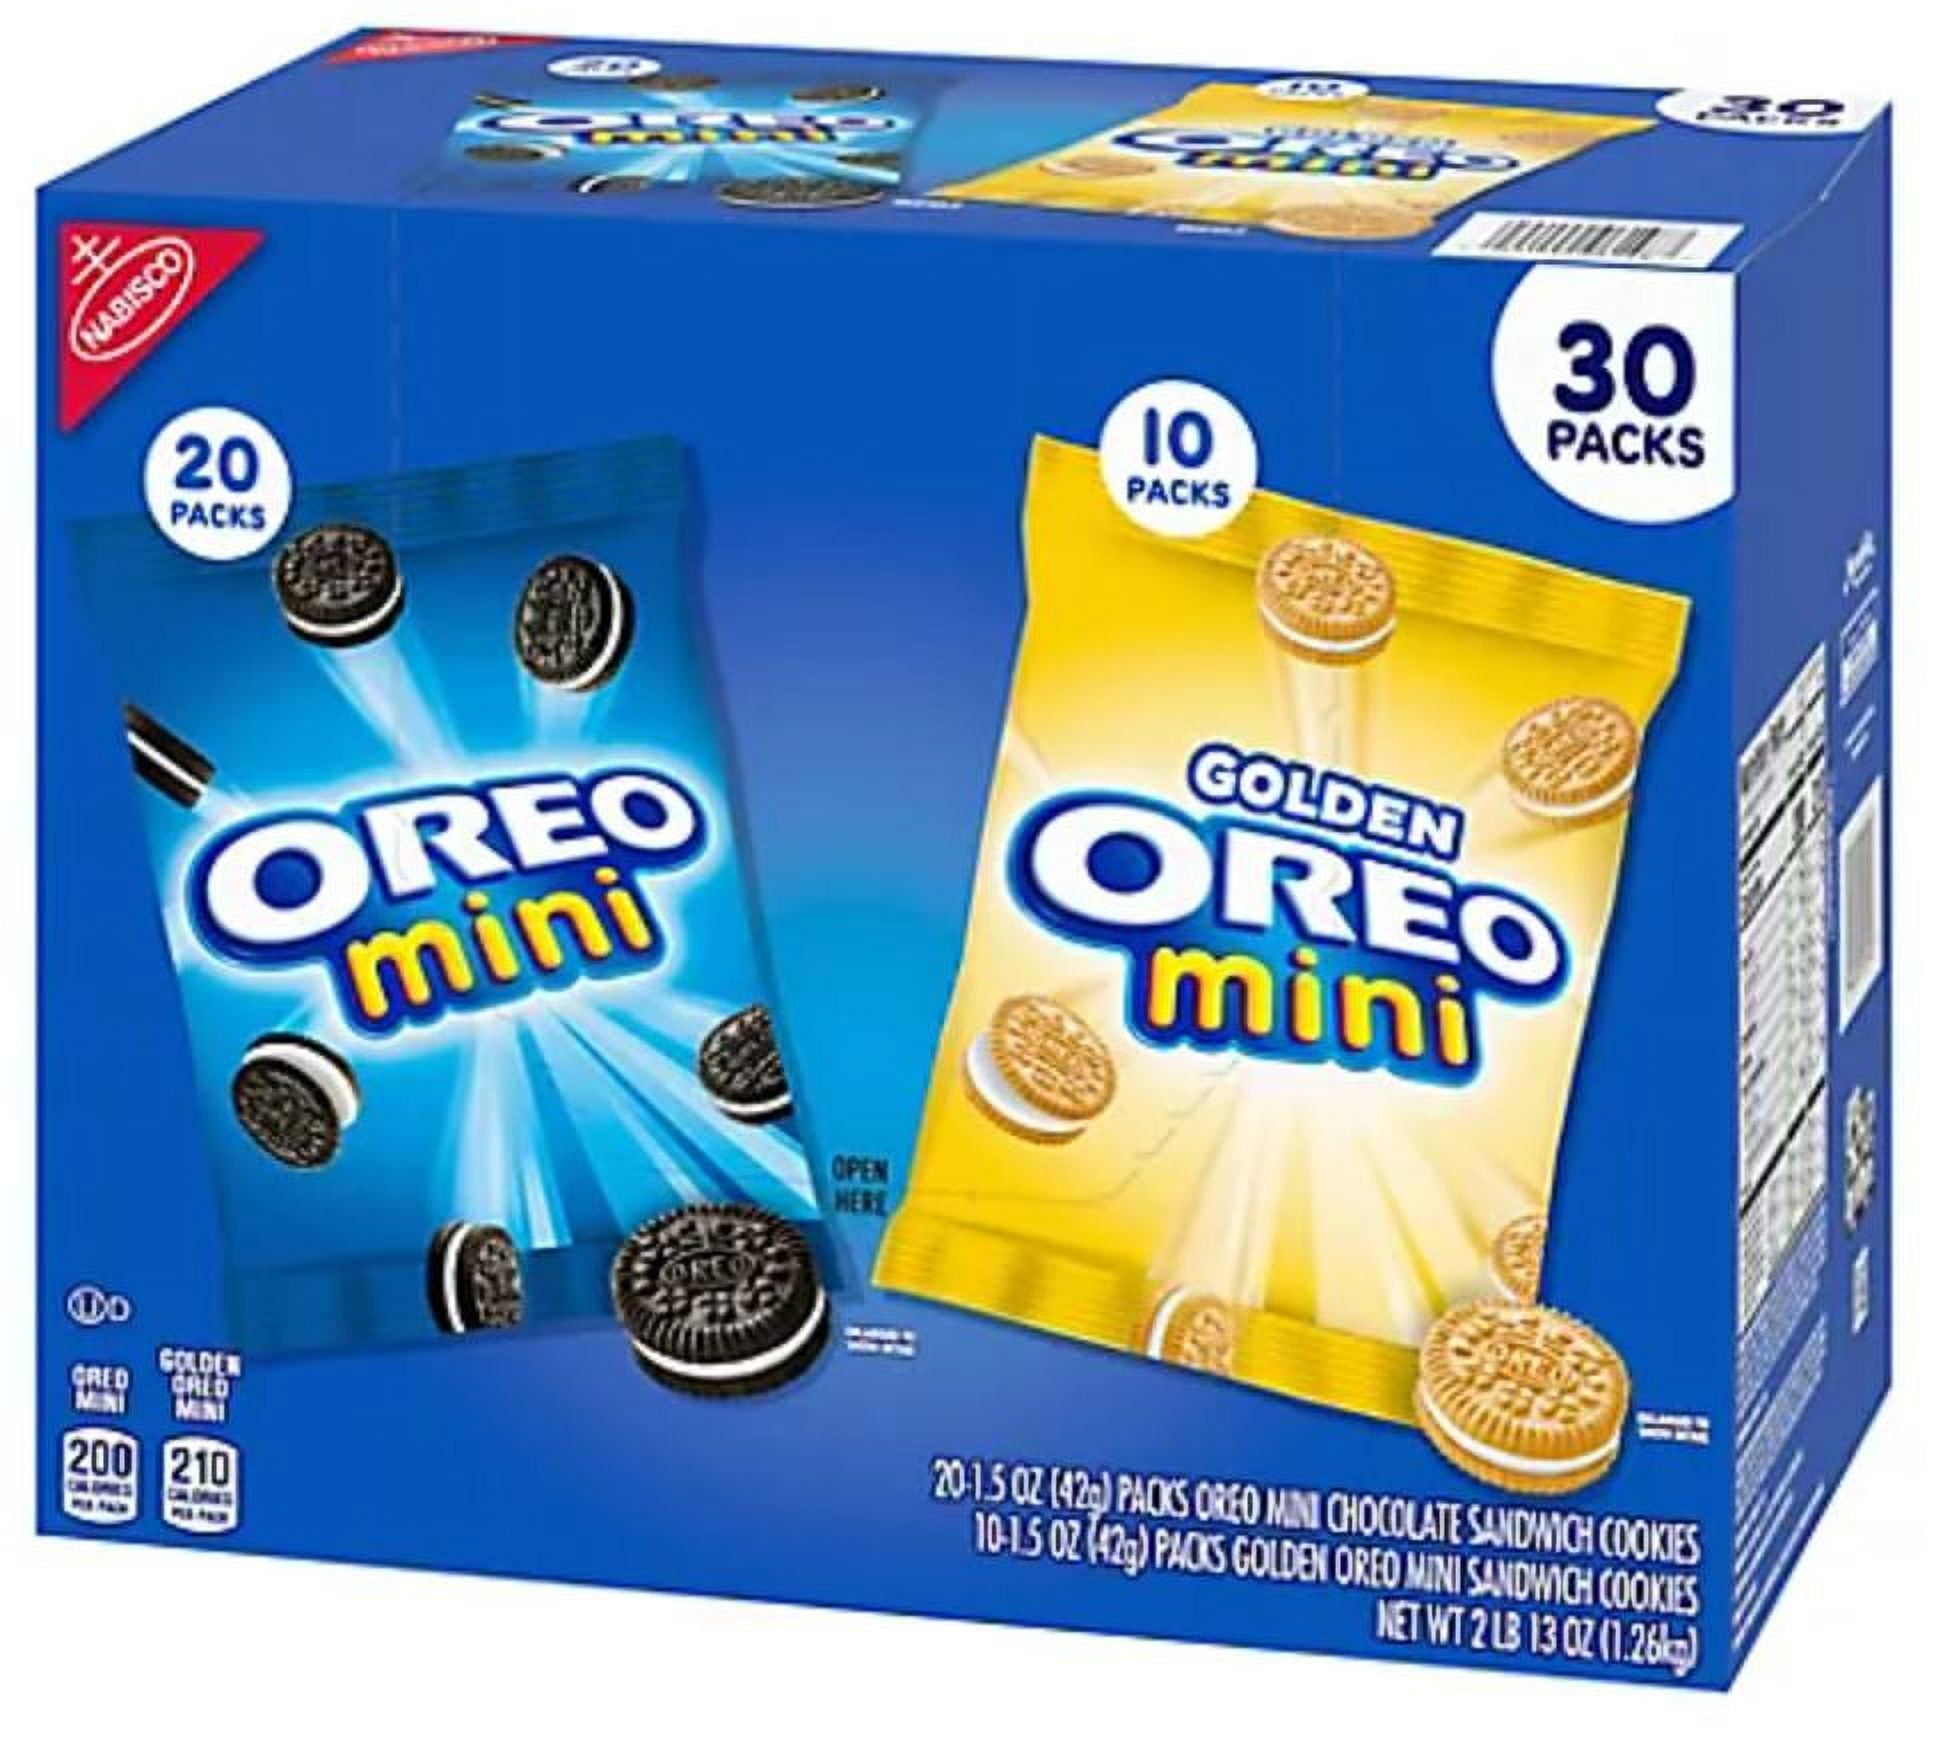 Oreo Mini Mix, Chocolate, Golden, 20 Packs - 20 pack, 1 oz packs